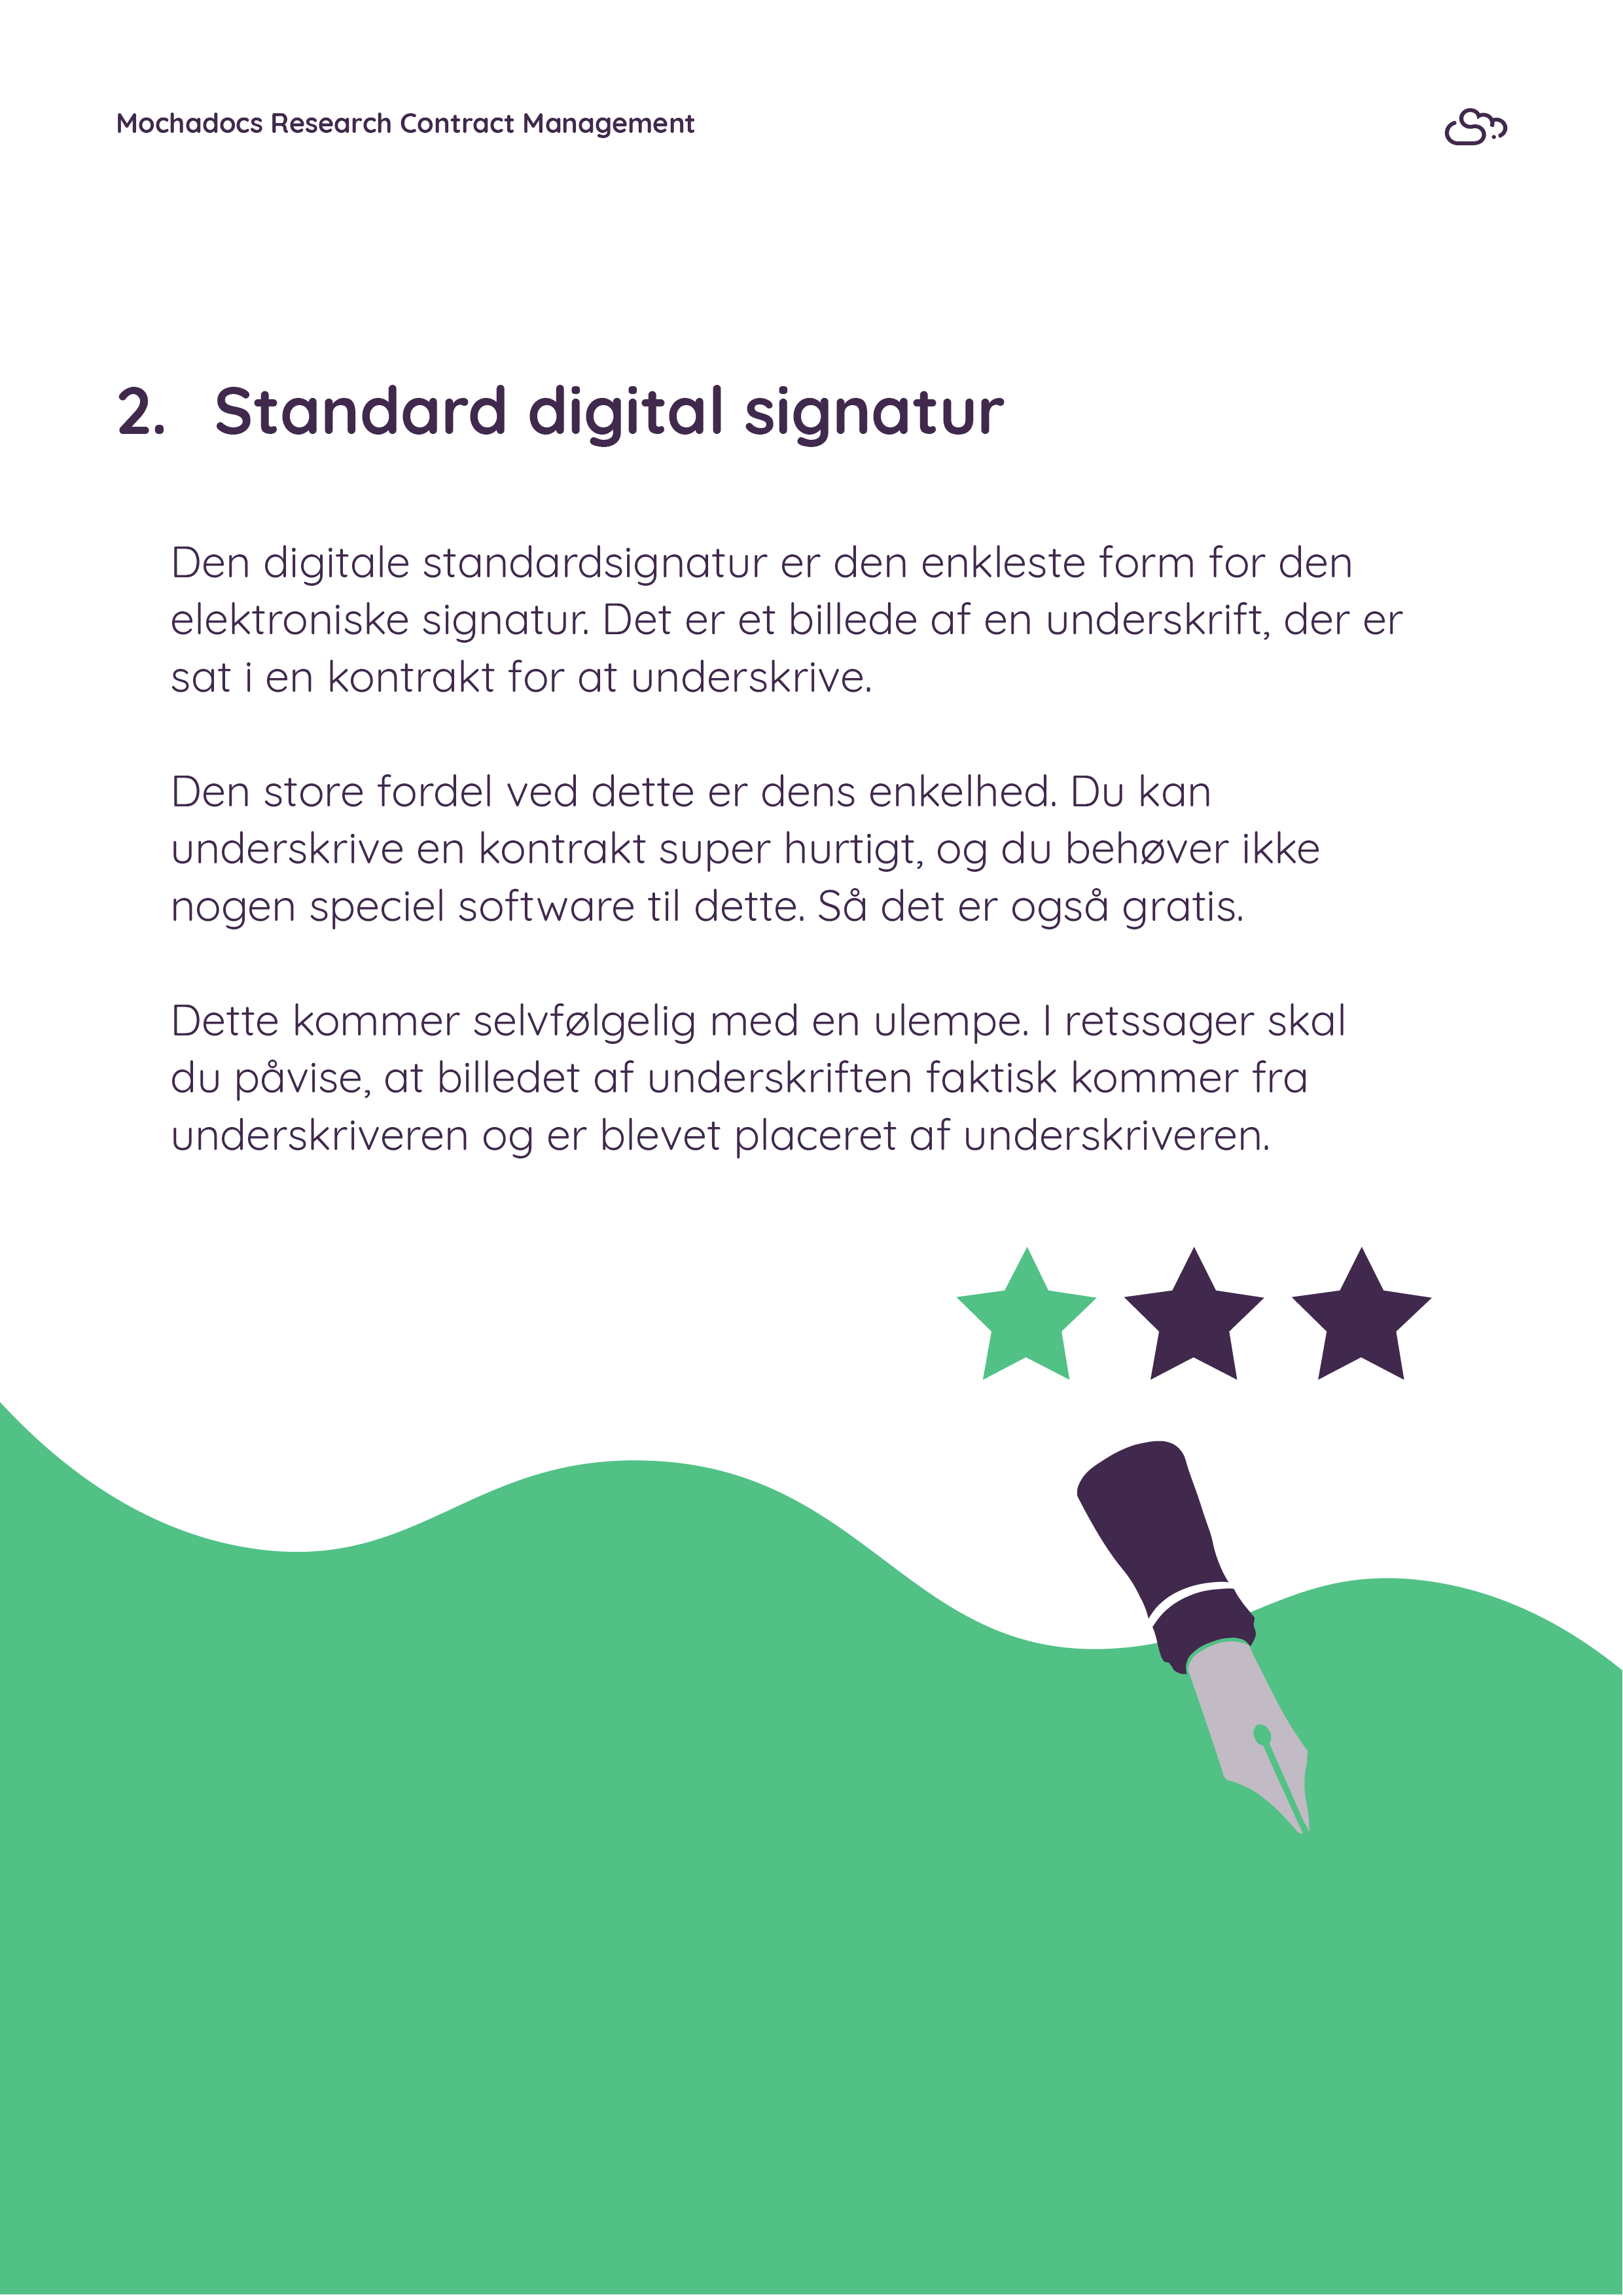 De 3 typer digitale signaturer8